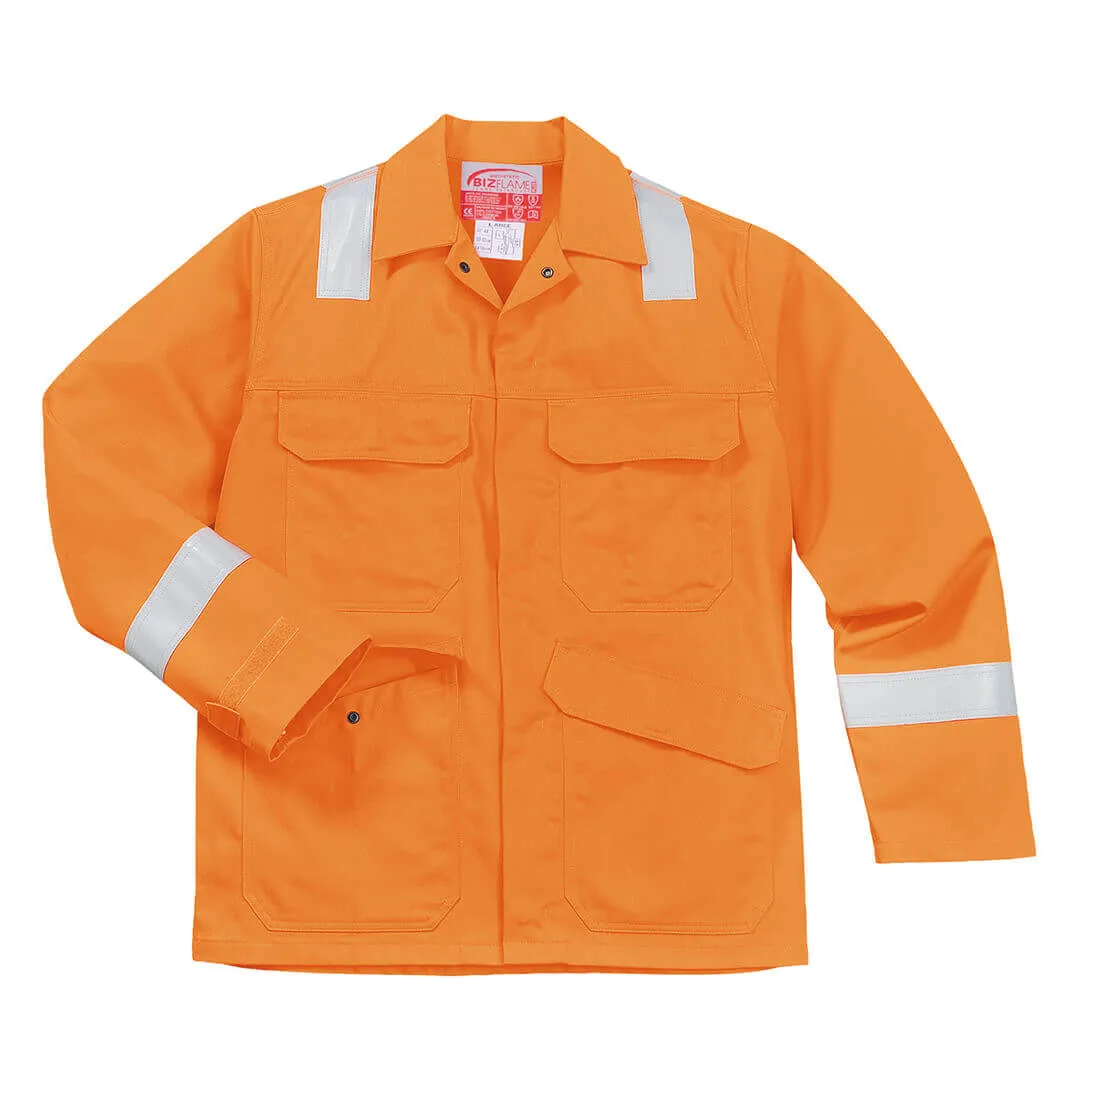 Biz Flame Mens Flame Resistant Jacket - Orange, 3XL